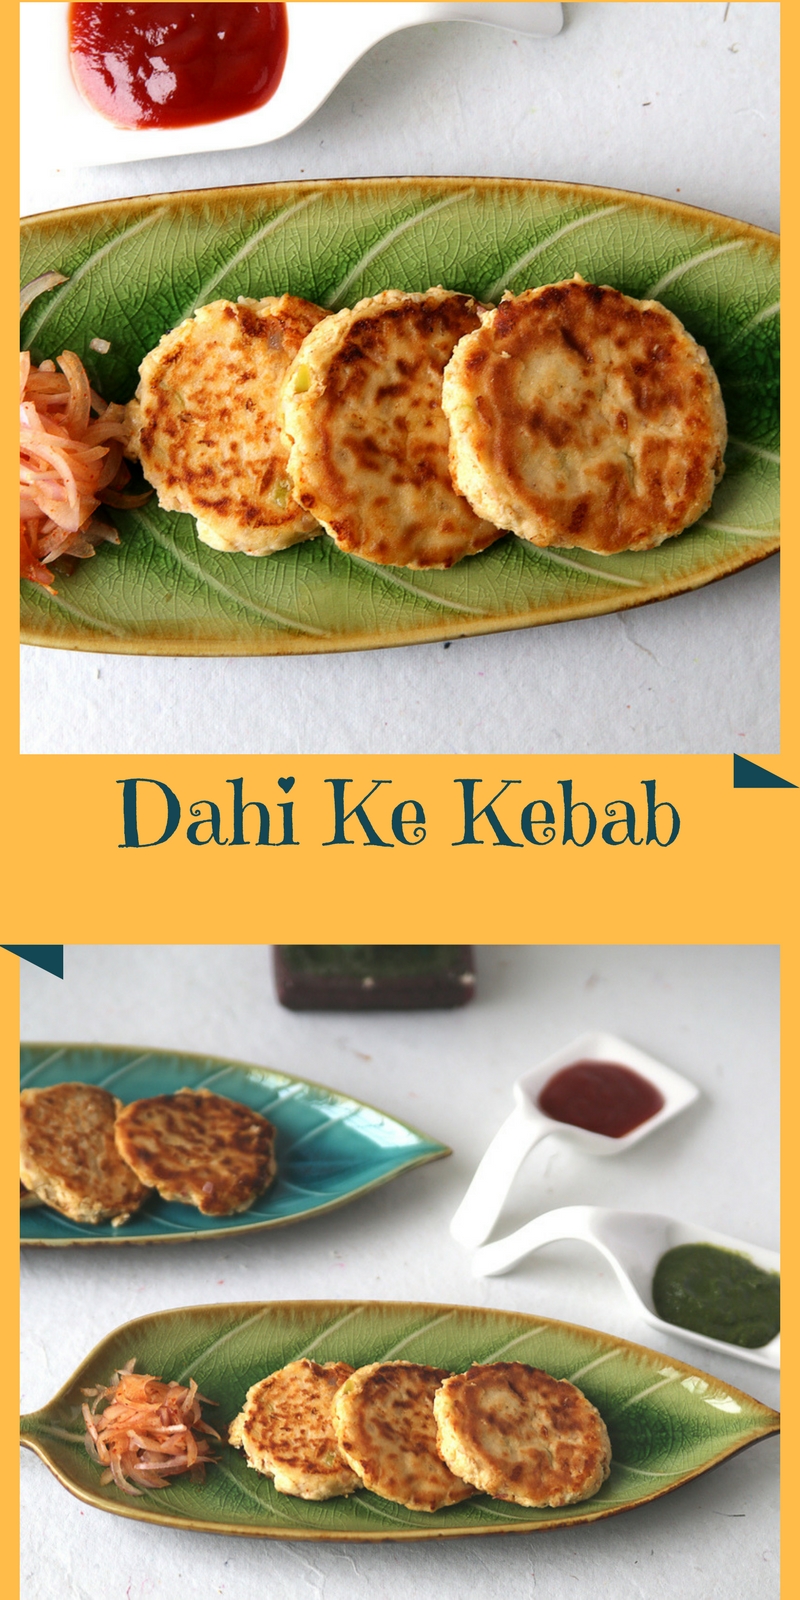 dahi ke kebab - healthy, vegetarian, yummy appetizer, snack